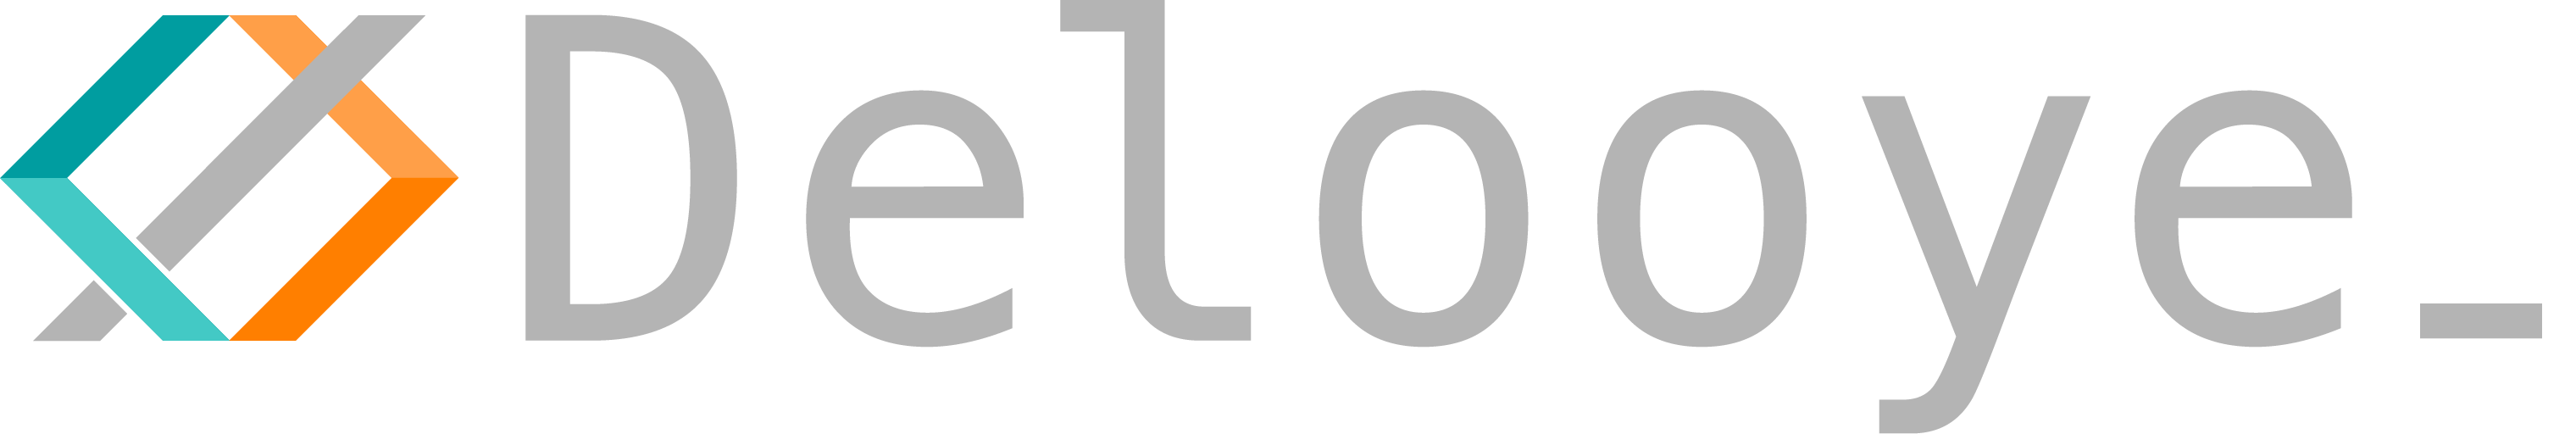 Logo of Delooye.